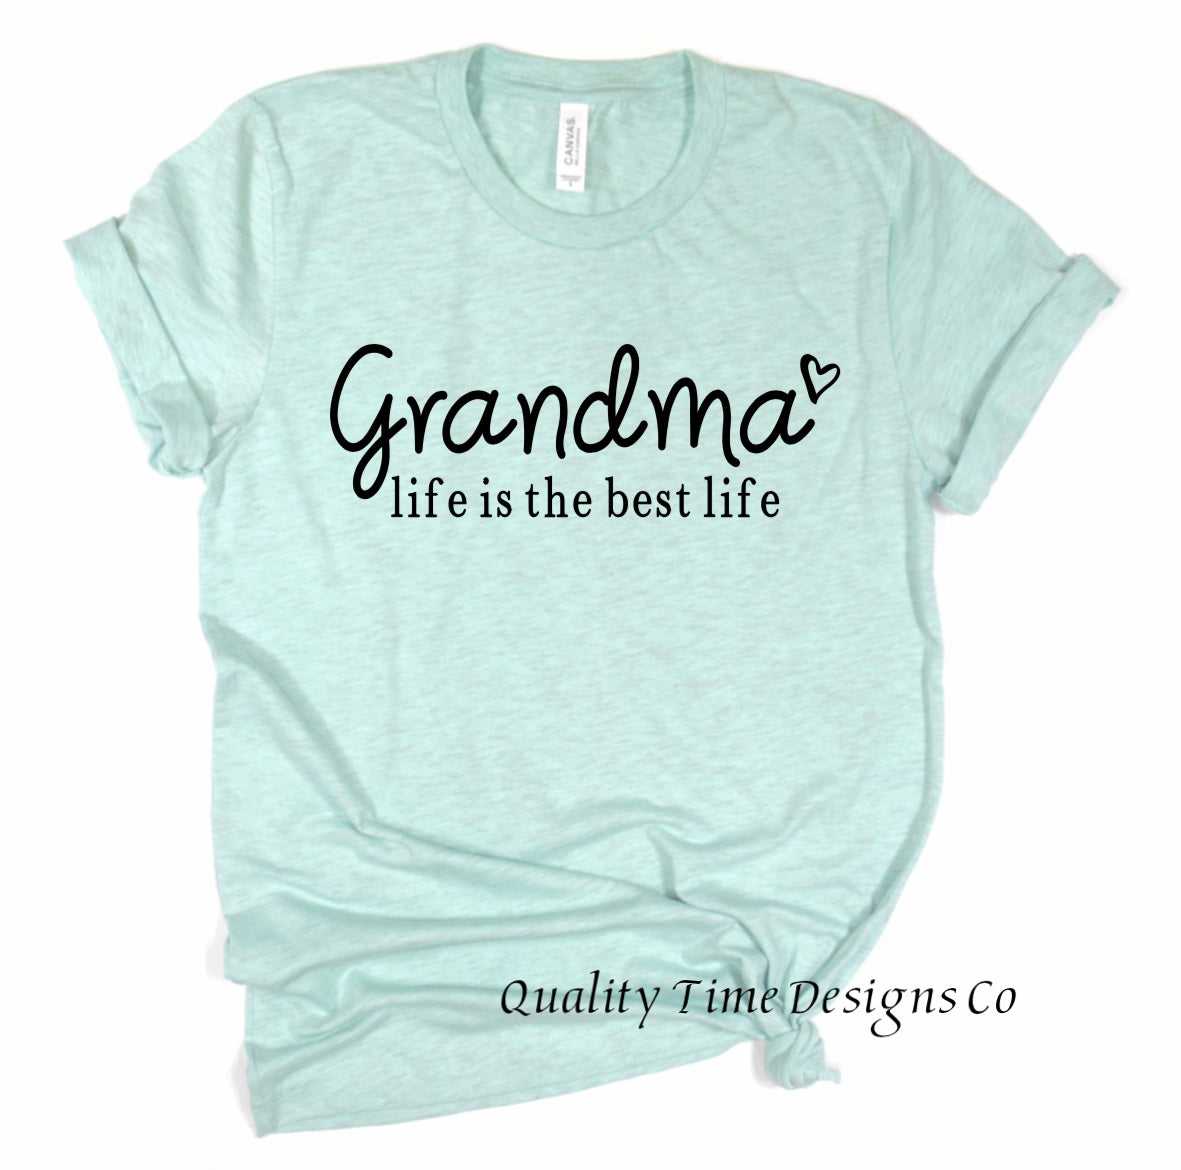 Grandma life is the best life t-shirt 